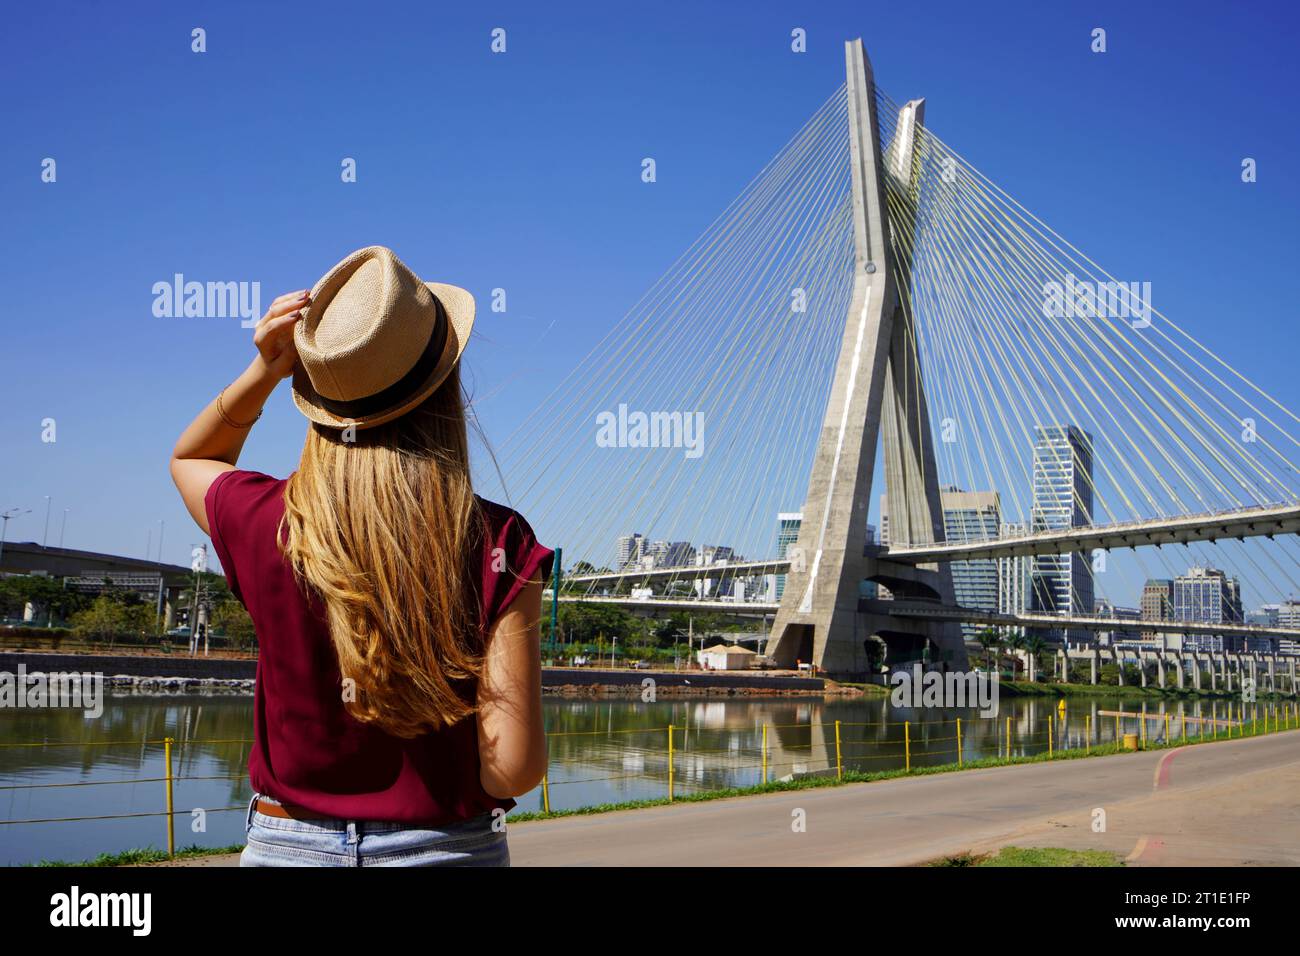 Tourism in Sao Paulo. Back view of traveler girl enjoying sight of Estaiada bridge in Sao Paulo, Brazil. Stock Photo